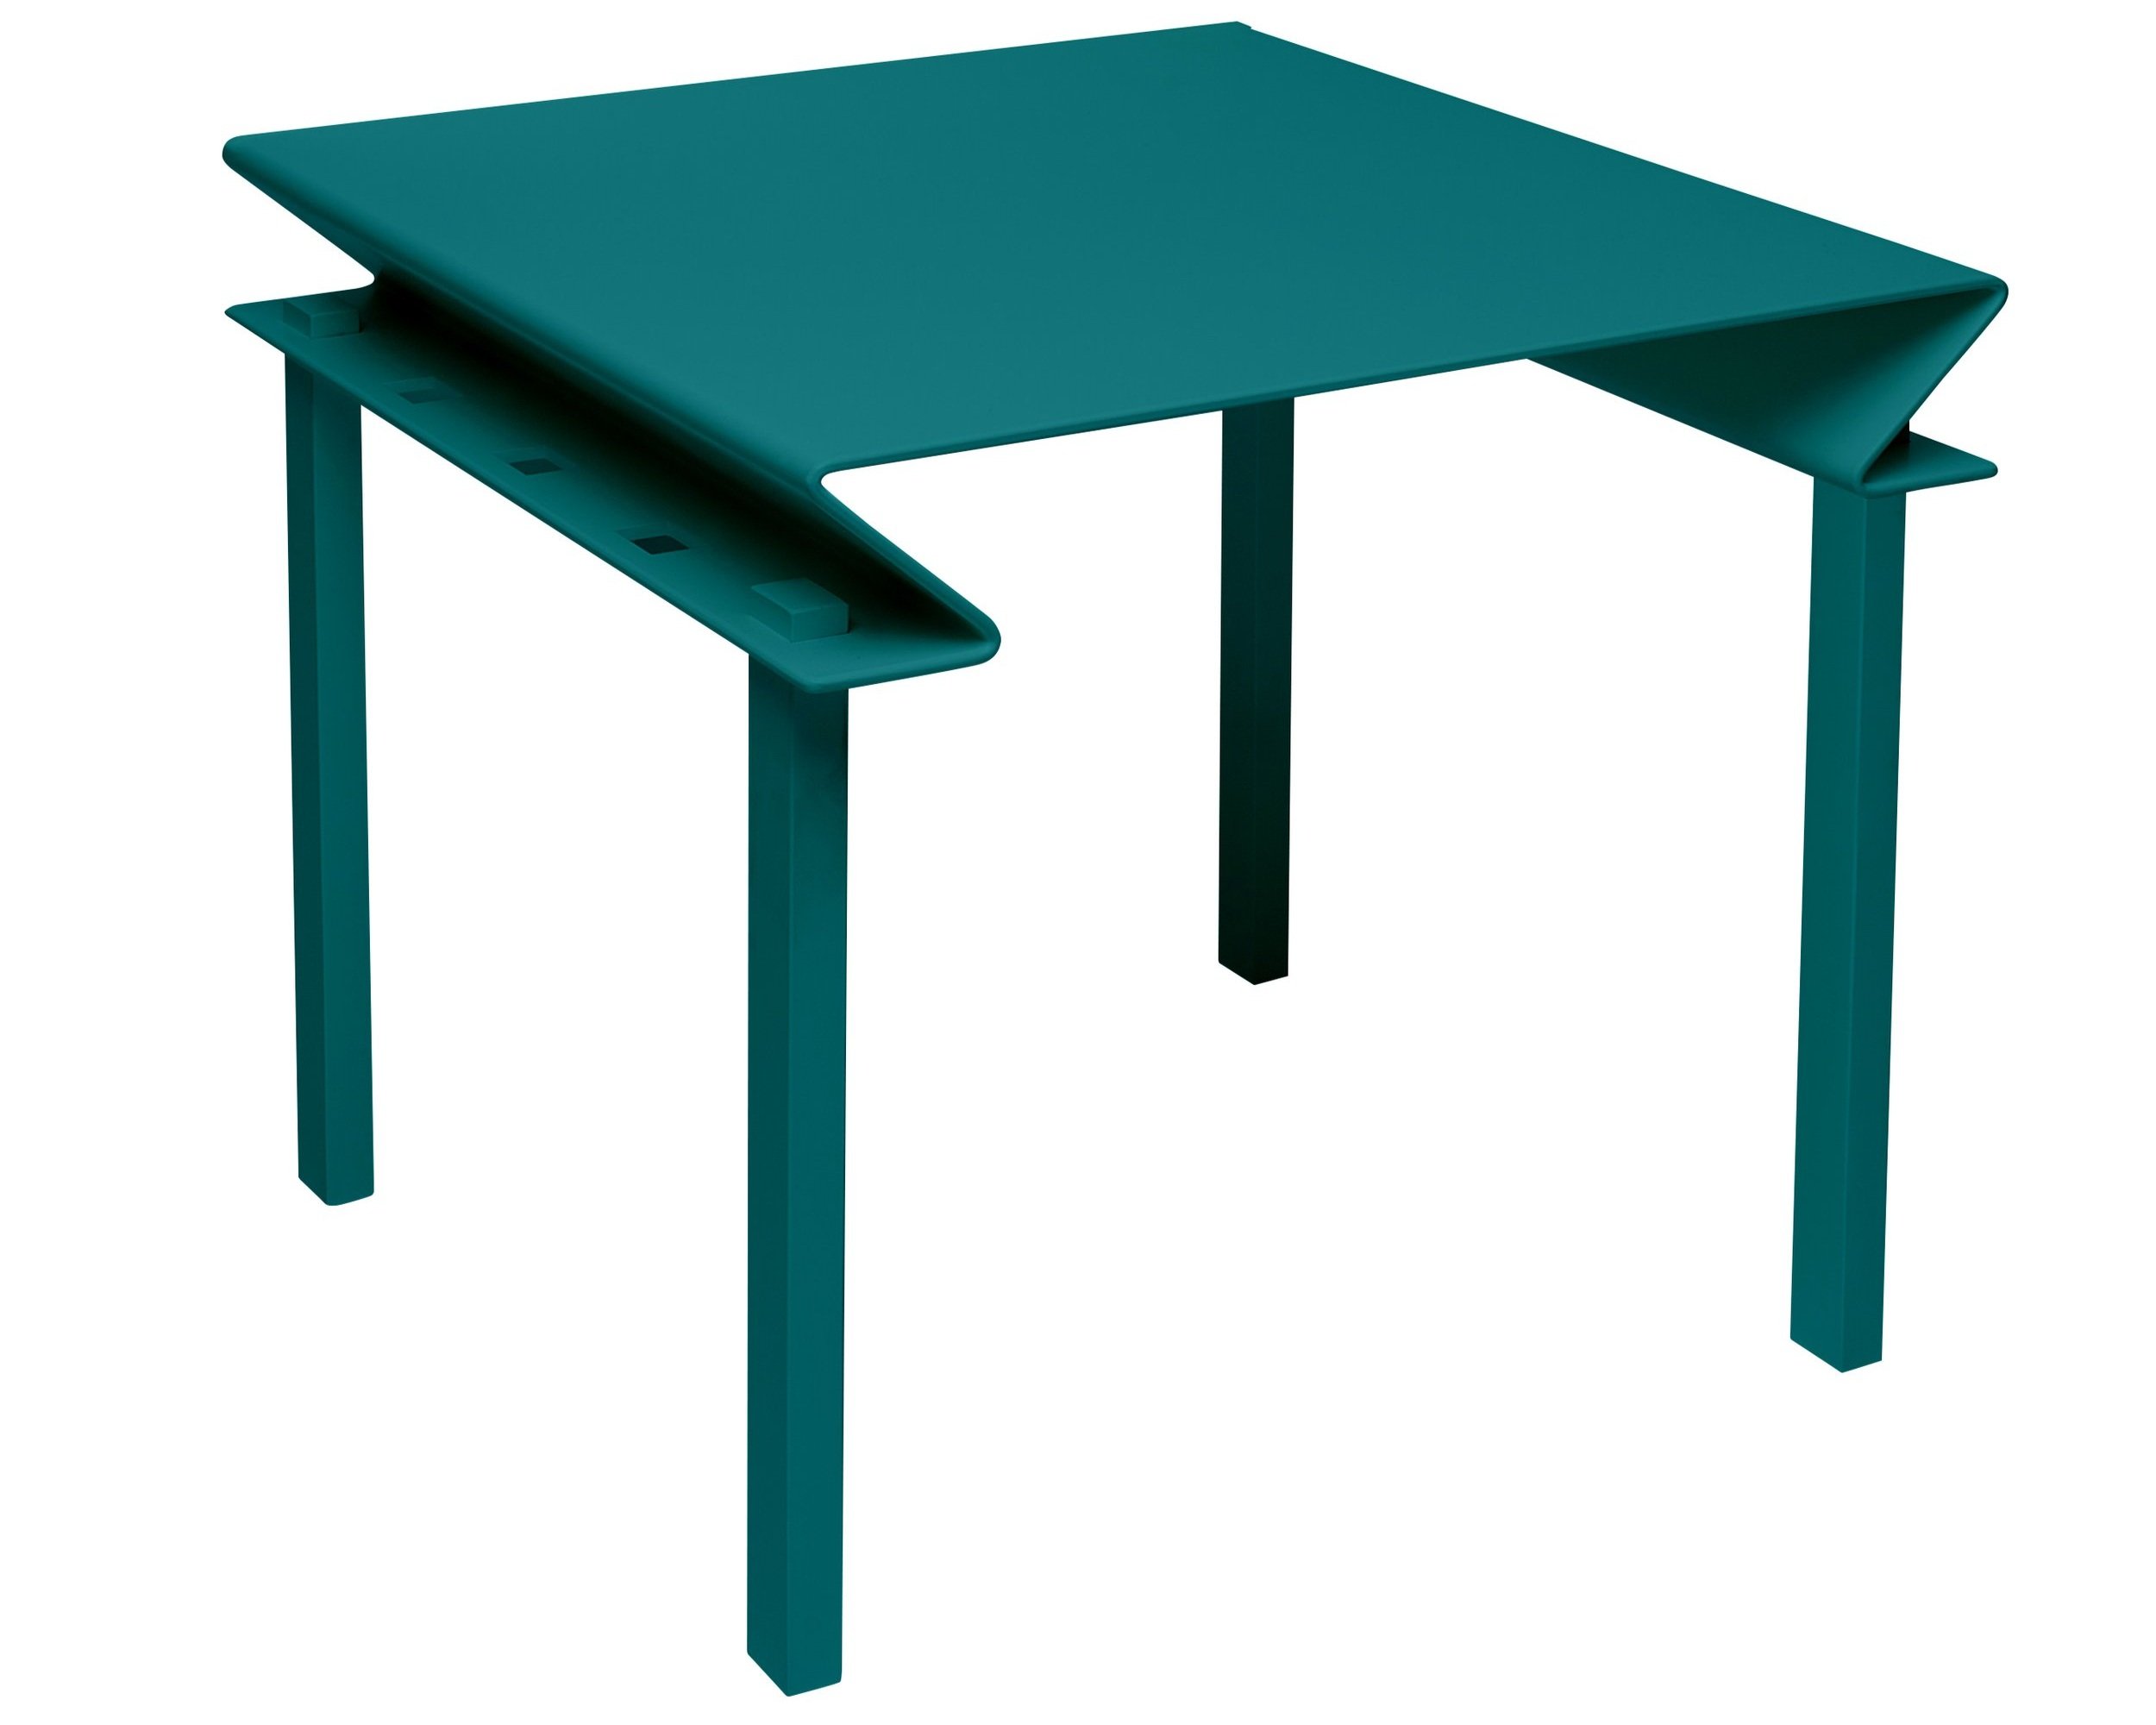 Fold+Side+Table+%283%29.jpg